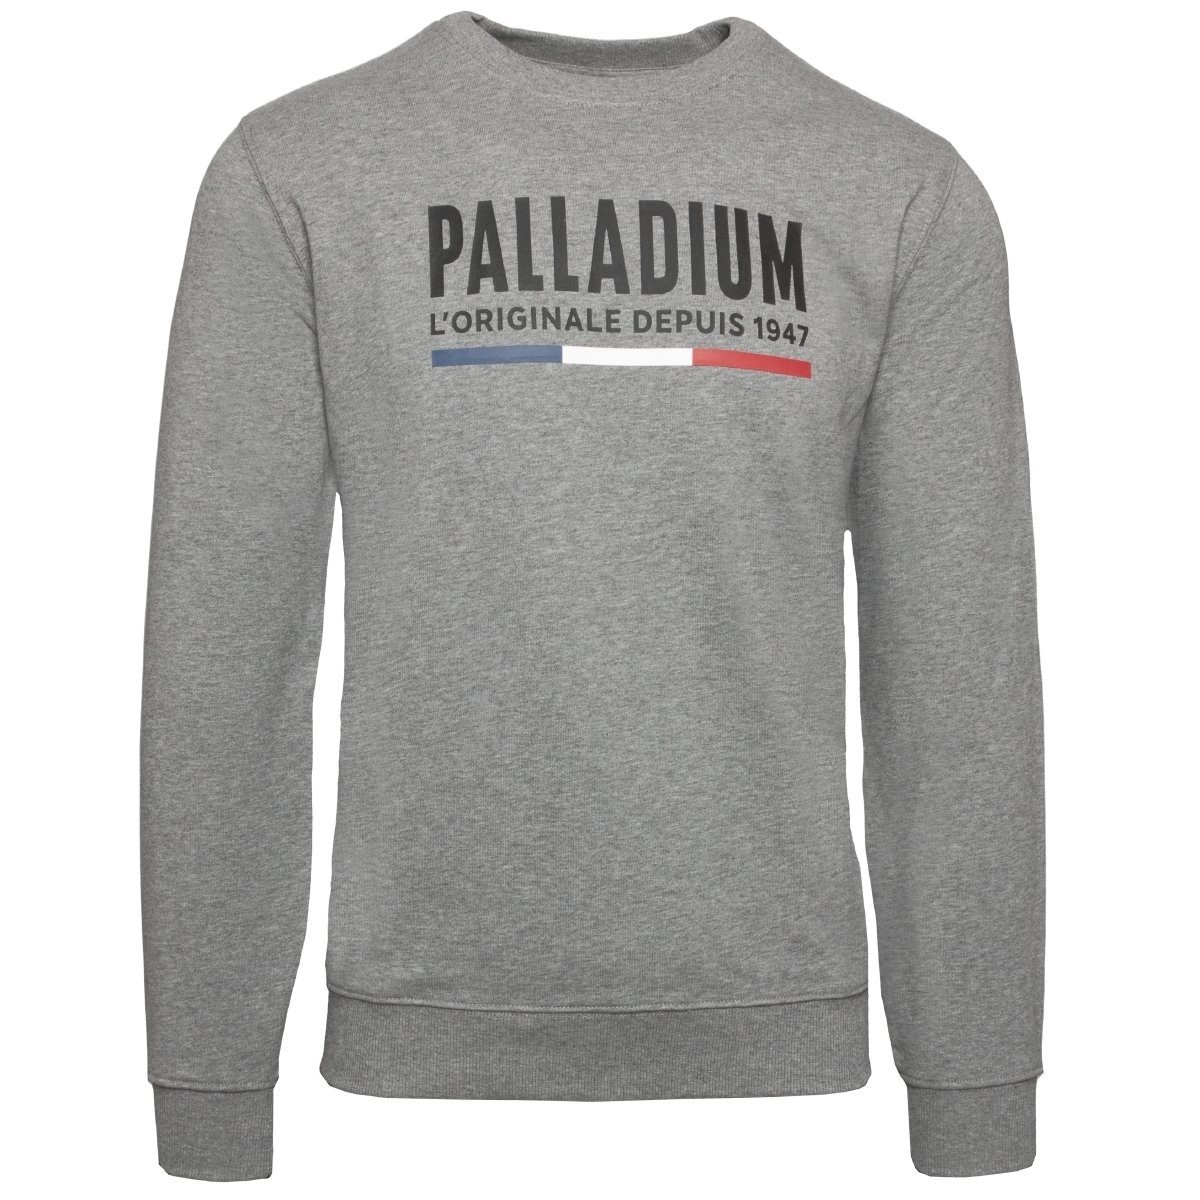 Originale France Sweatshirt grau Herren Palladium